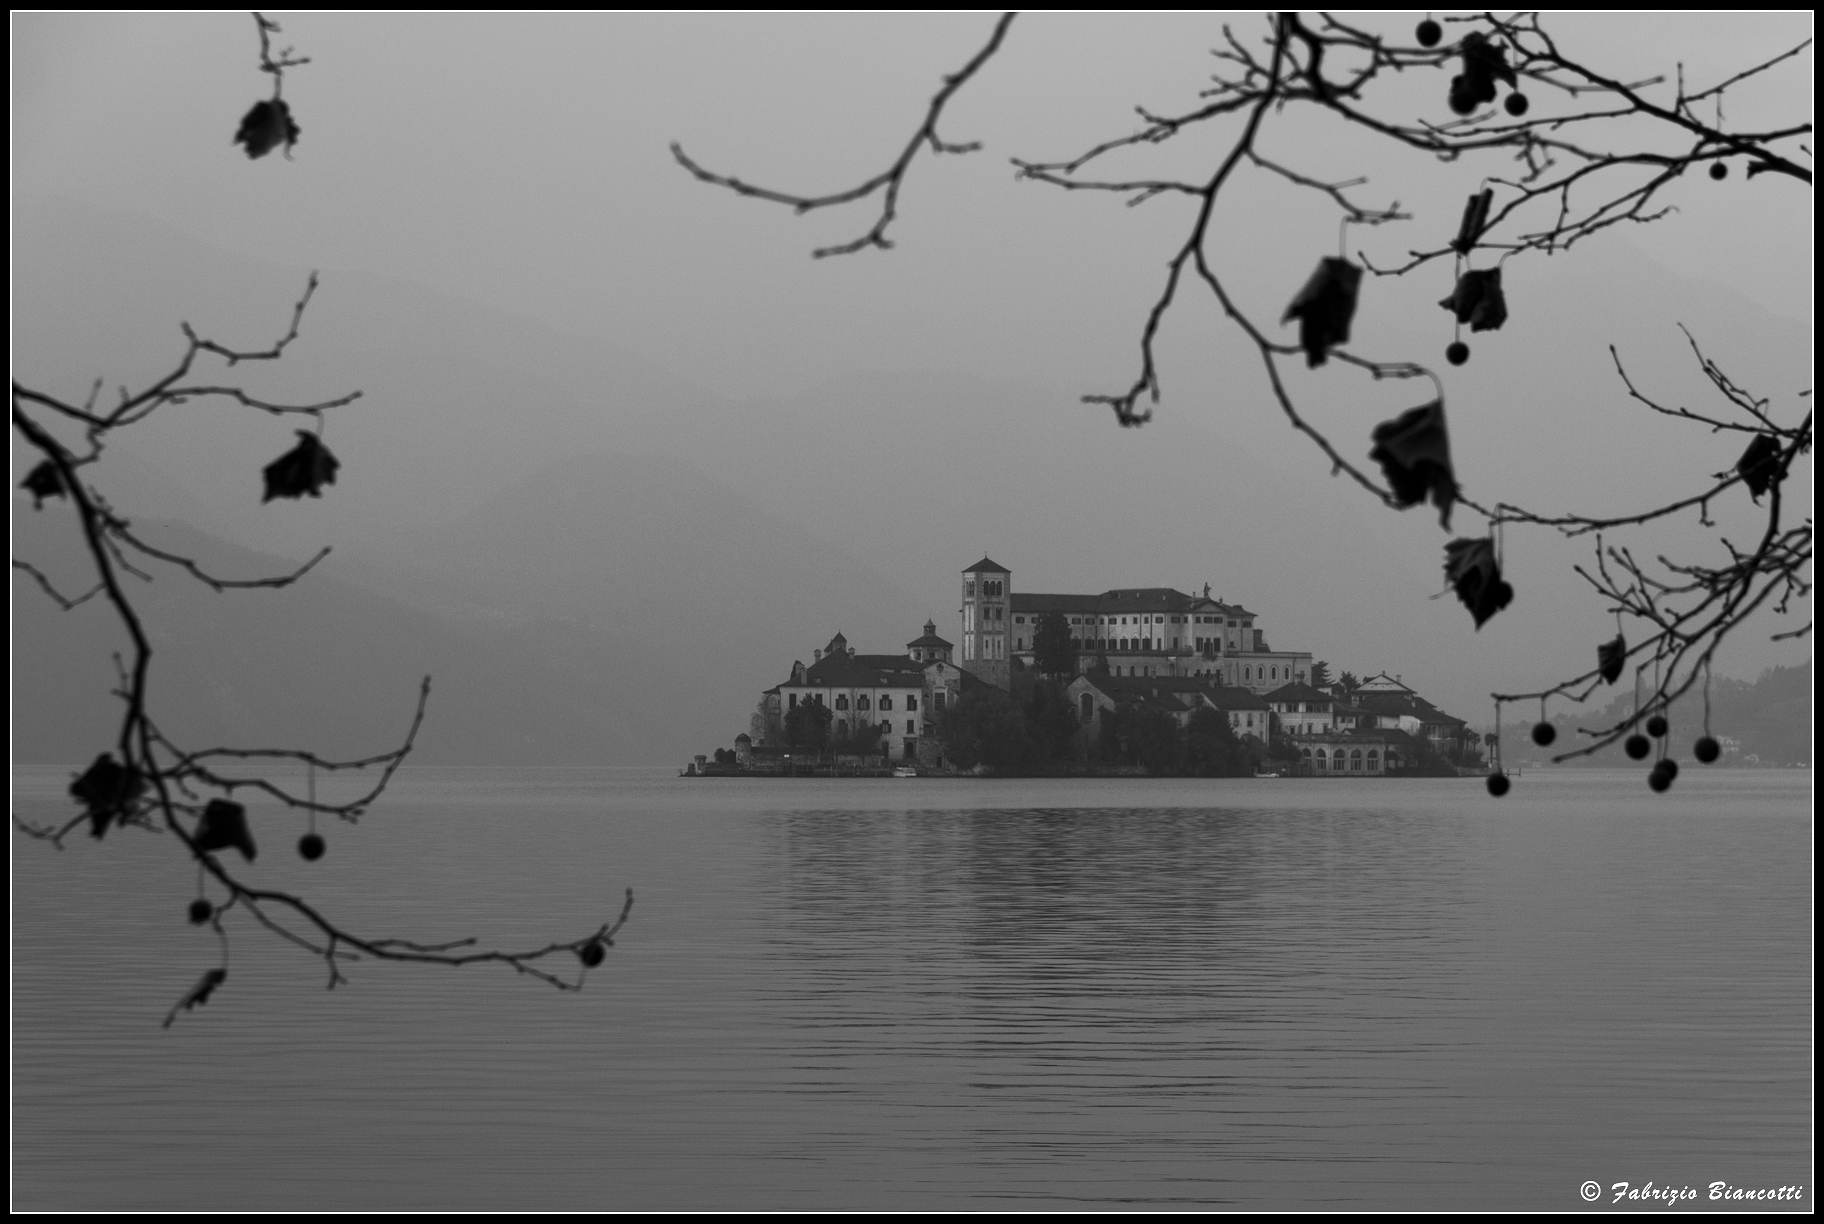 Postcard from Lake Orta...